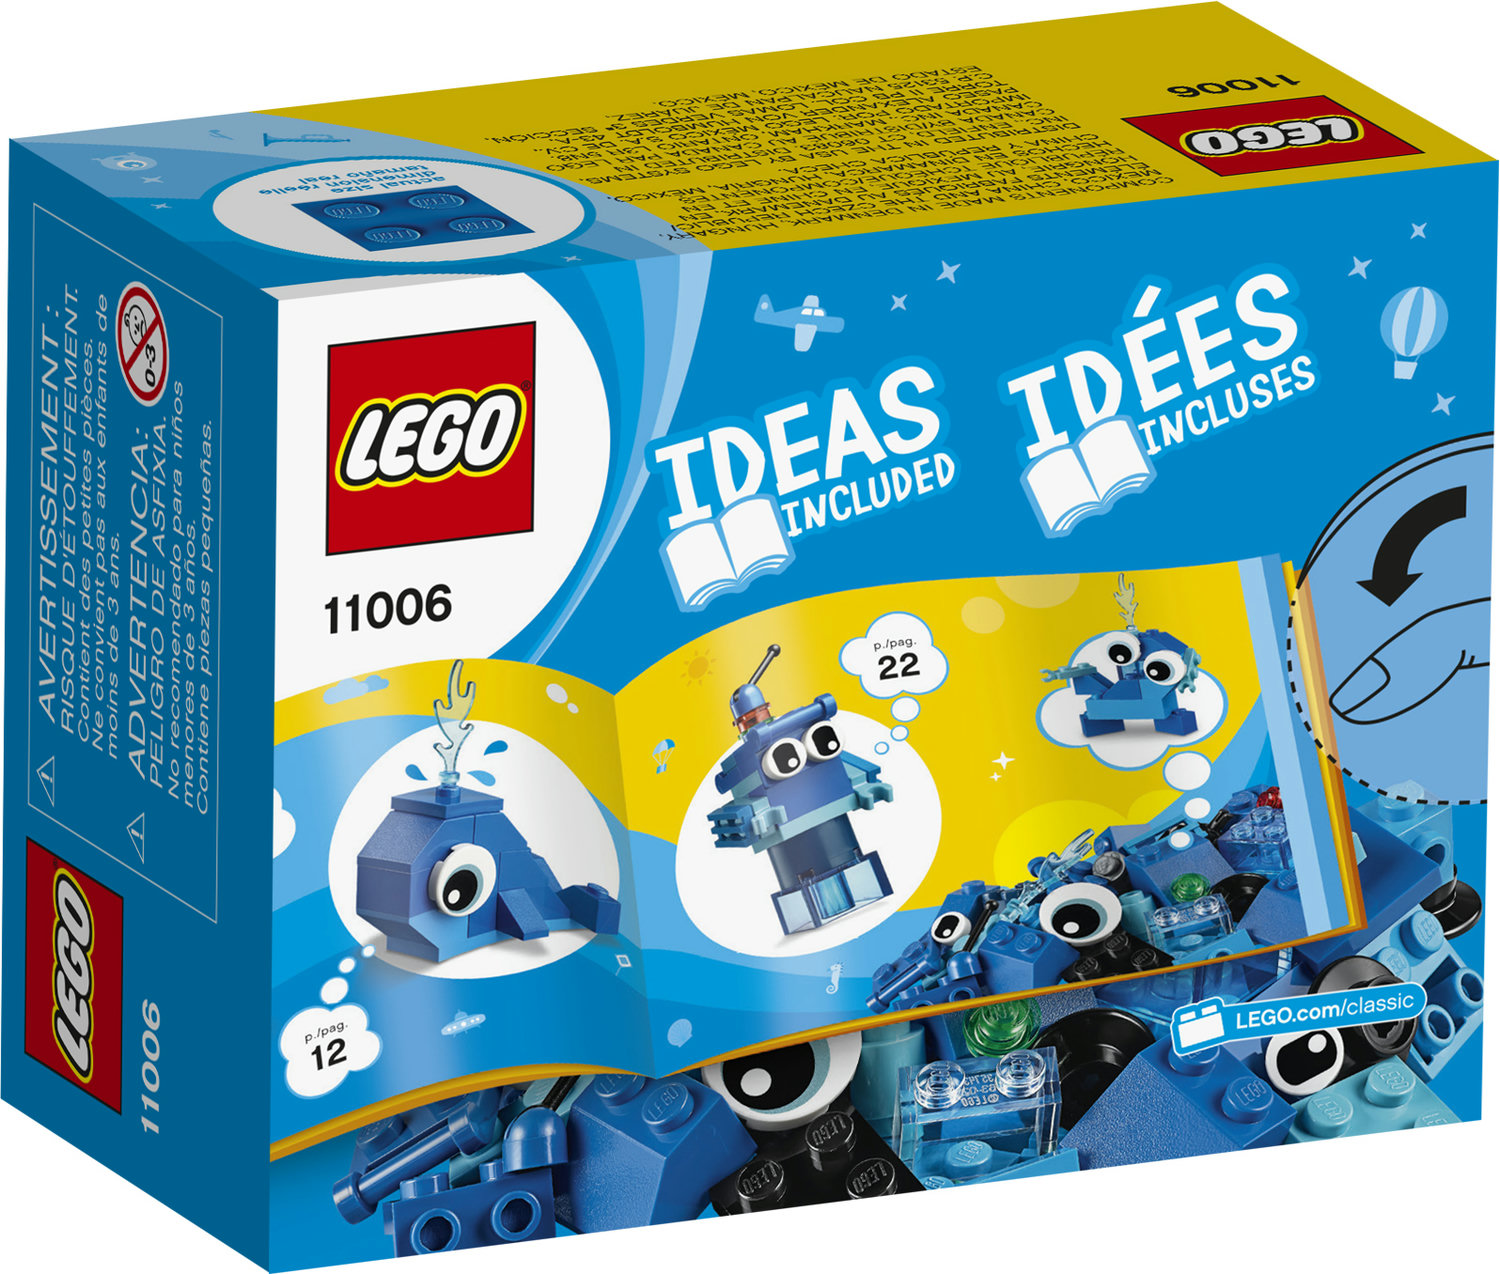 LEGO Classic Creative Blue Bricks 11006 Building Set for Imaginative Play (52 Pieces) - image 3 of 5